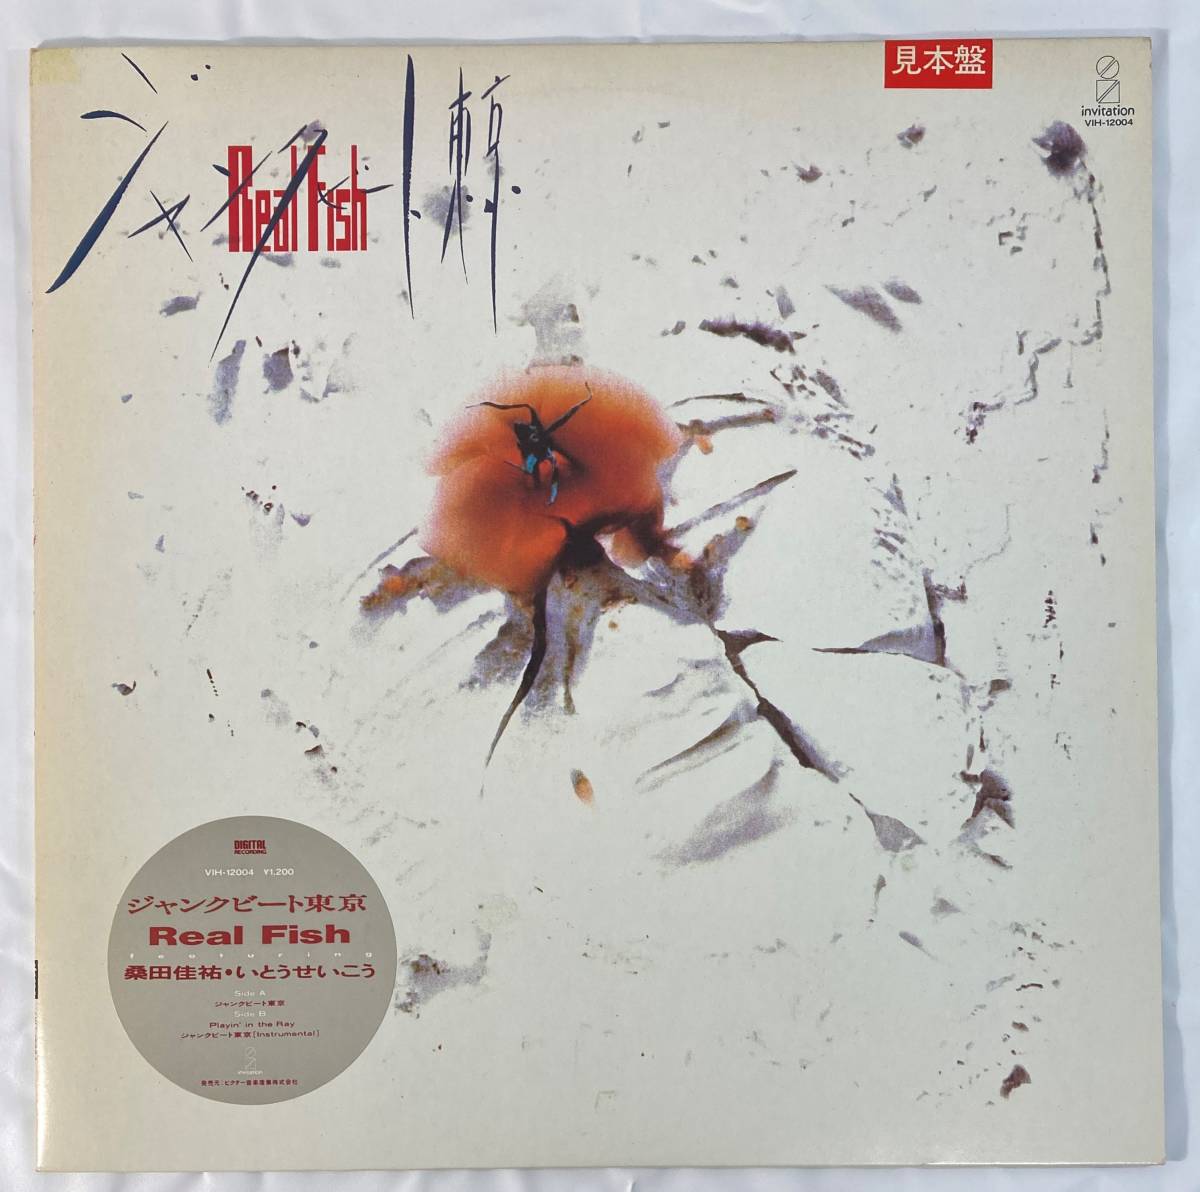  Junk свекла Tokyo featuring тутовик рисовое поле ..* Ito Seiko / Real Fish записано в Японии ~12 VI VIH-12004 Promo